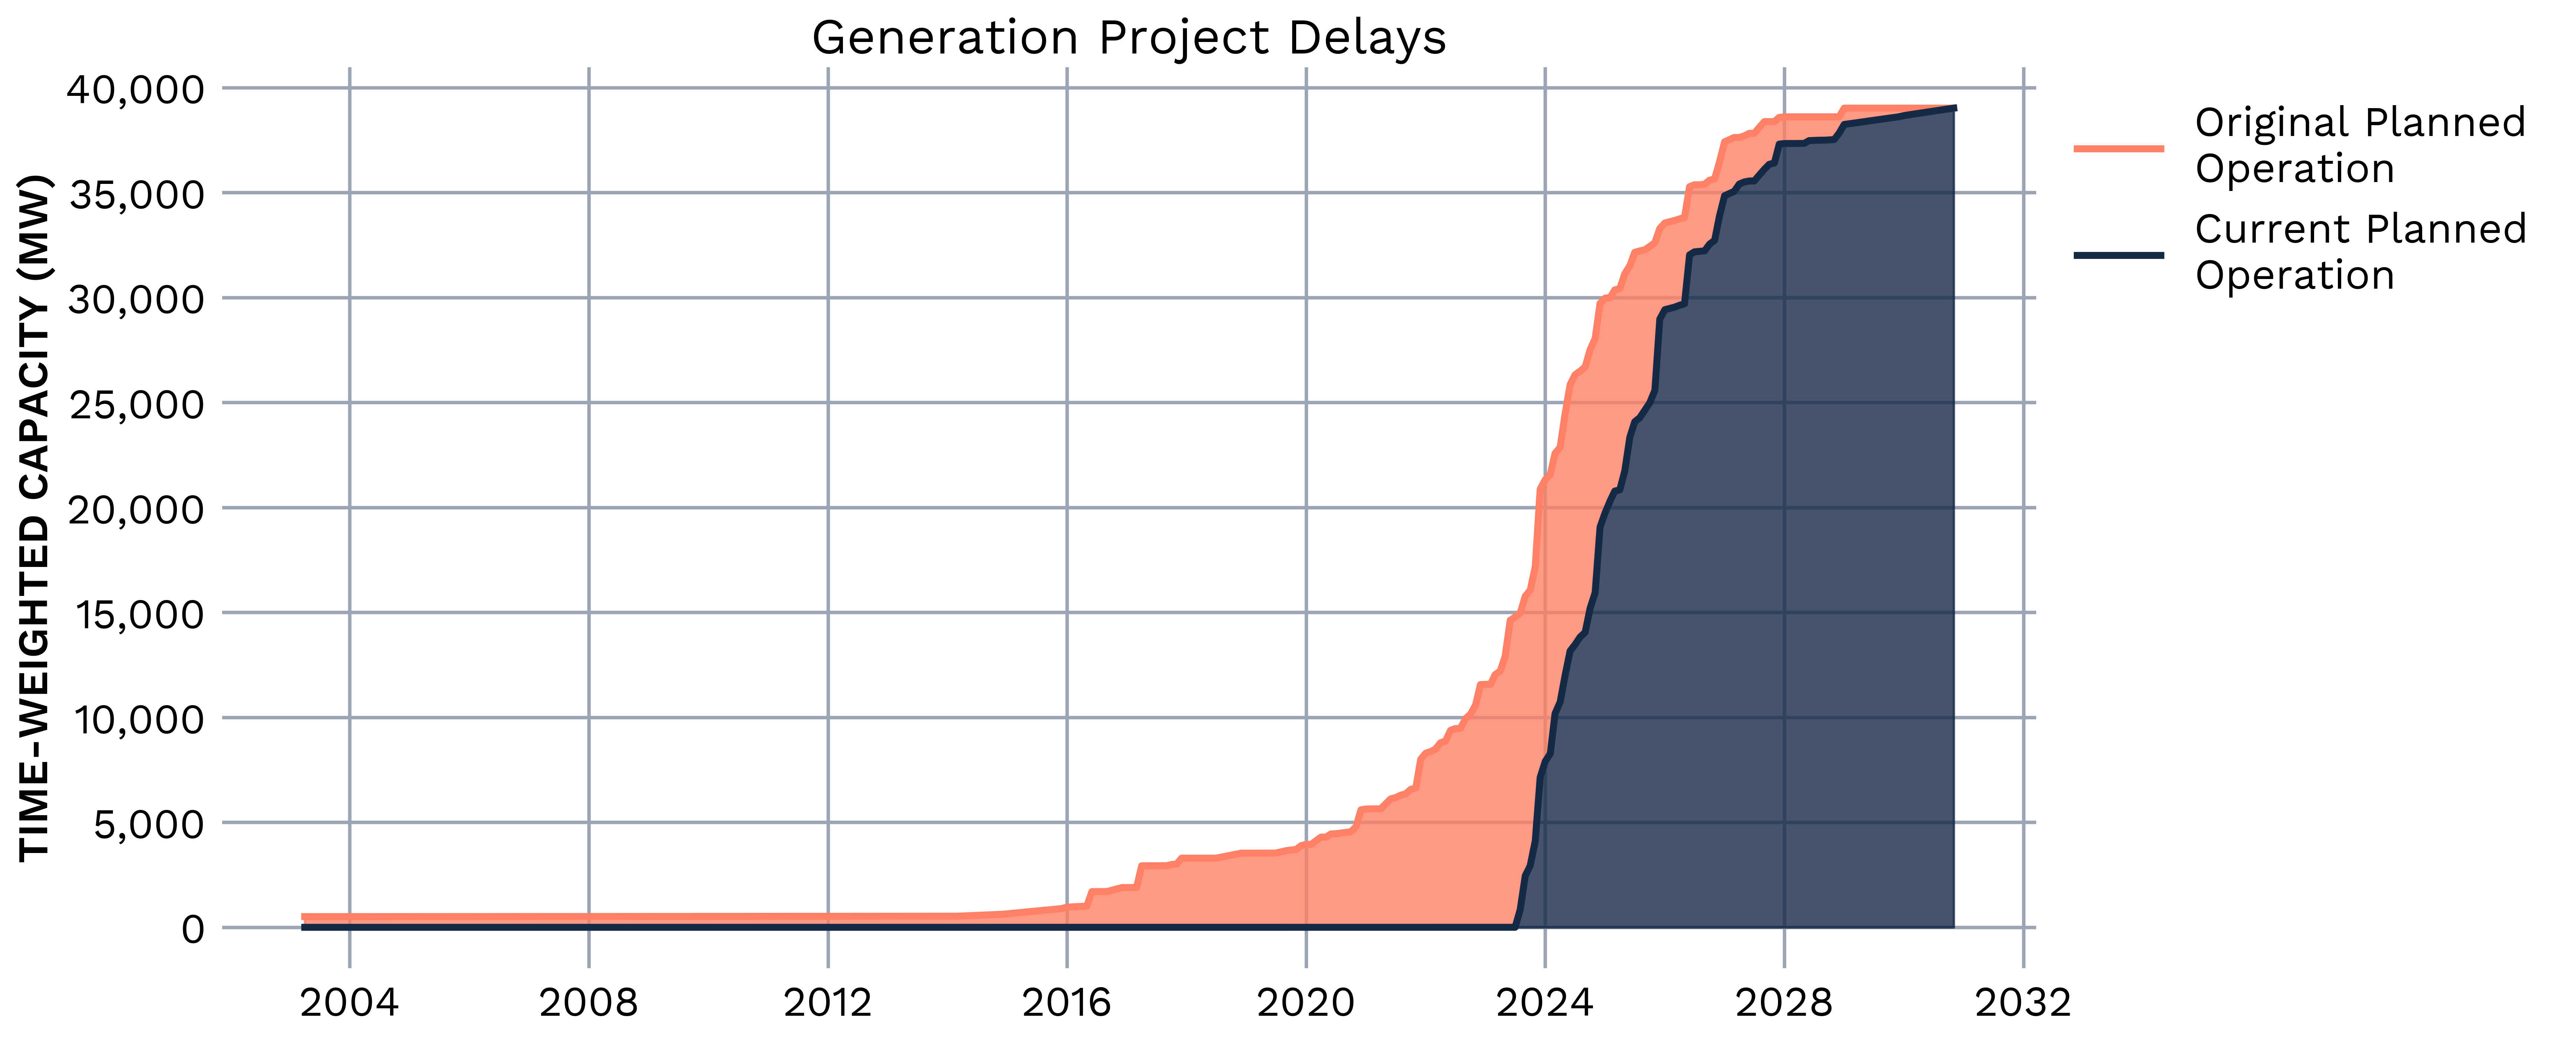 Generation Project Delays